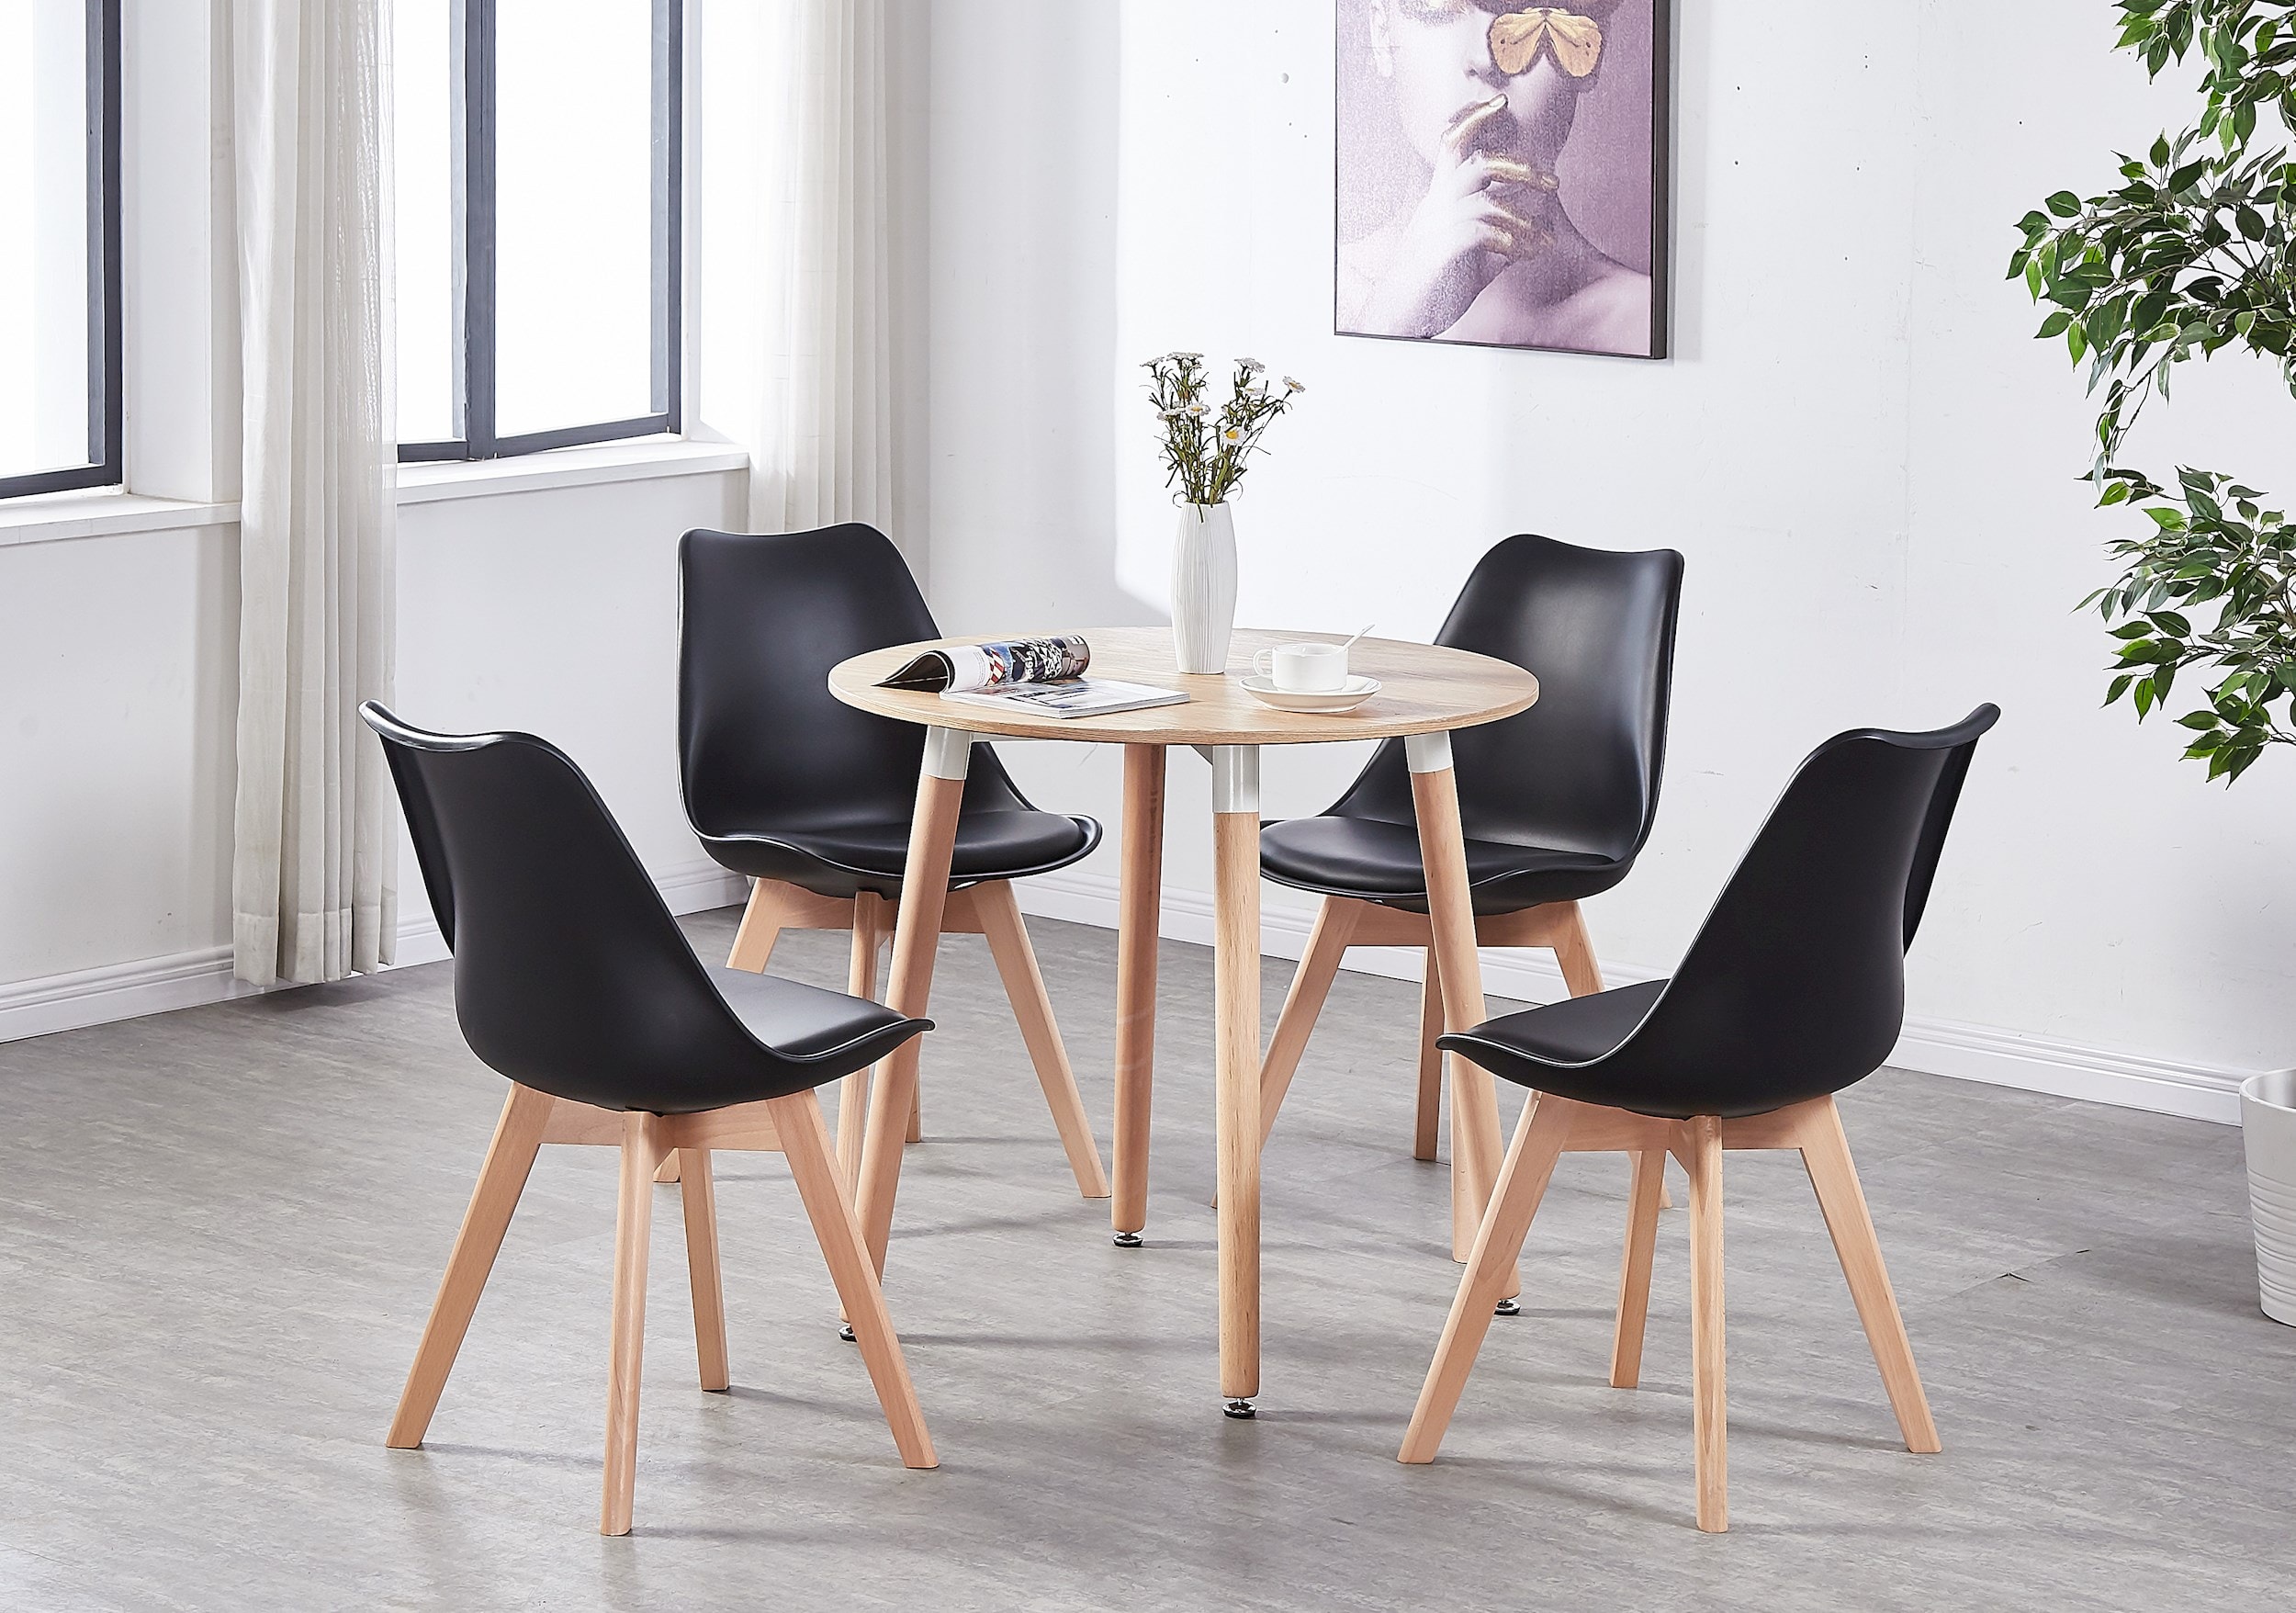 Ensemble salle à manger moderne lorenzo - table effet chêne + 4 chaises  effet chênes - design scandinave